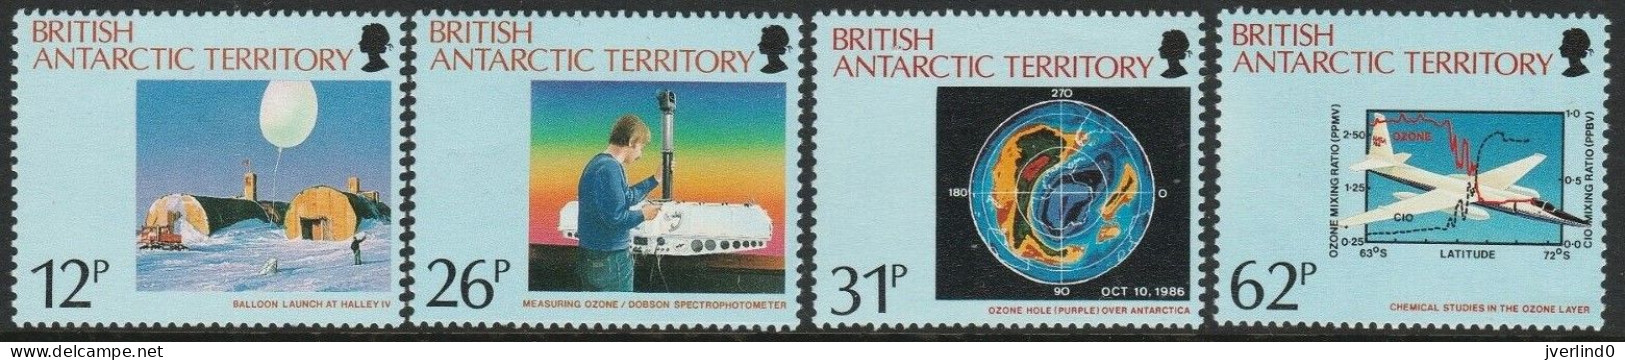 British Antarctic Territory 1991 Ozon Hole Complete Set MNH - Nuevos